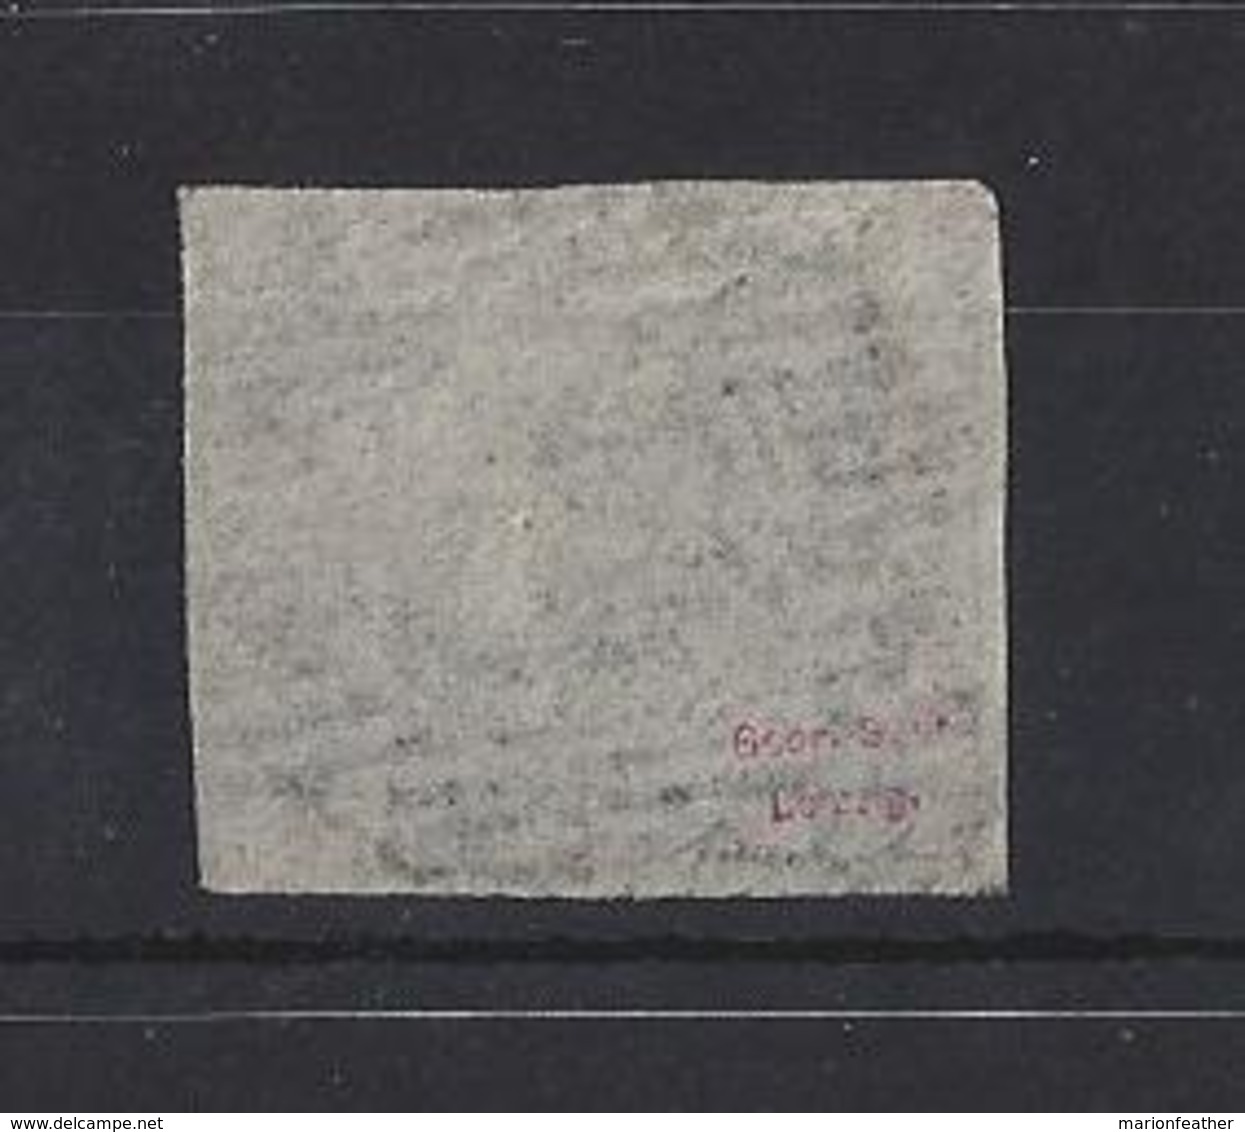 WESTERN AUSTRALIA."QUEEN VICTORIA ".(1837-01)...1d..BLACK SWAN...SG1...4 MARGIN...(CAT £275.).FINE USED. - Used Stamps